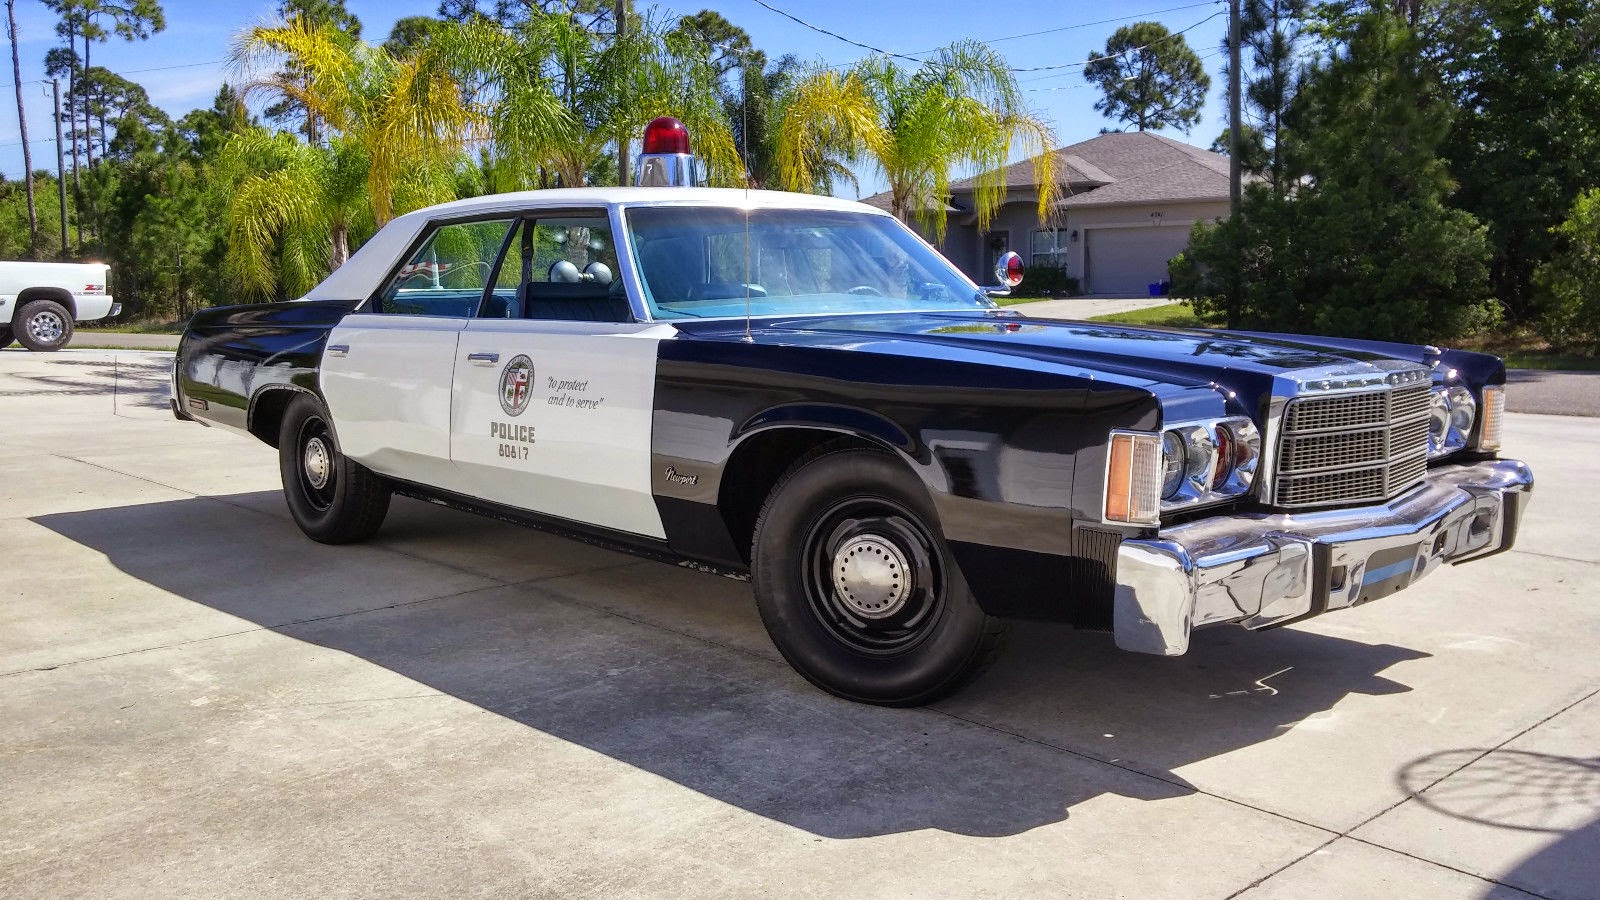 1978 Chrysler Newport Police Car4.JPG